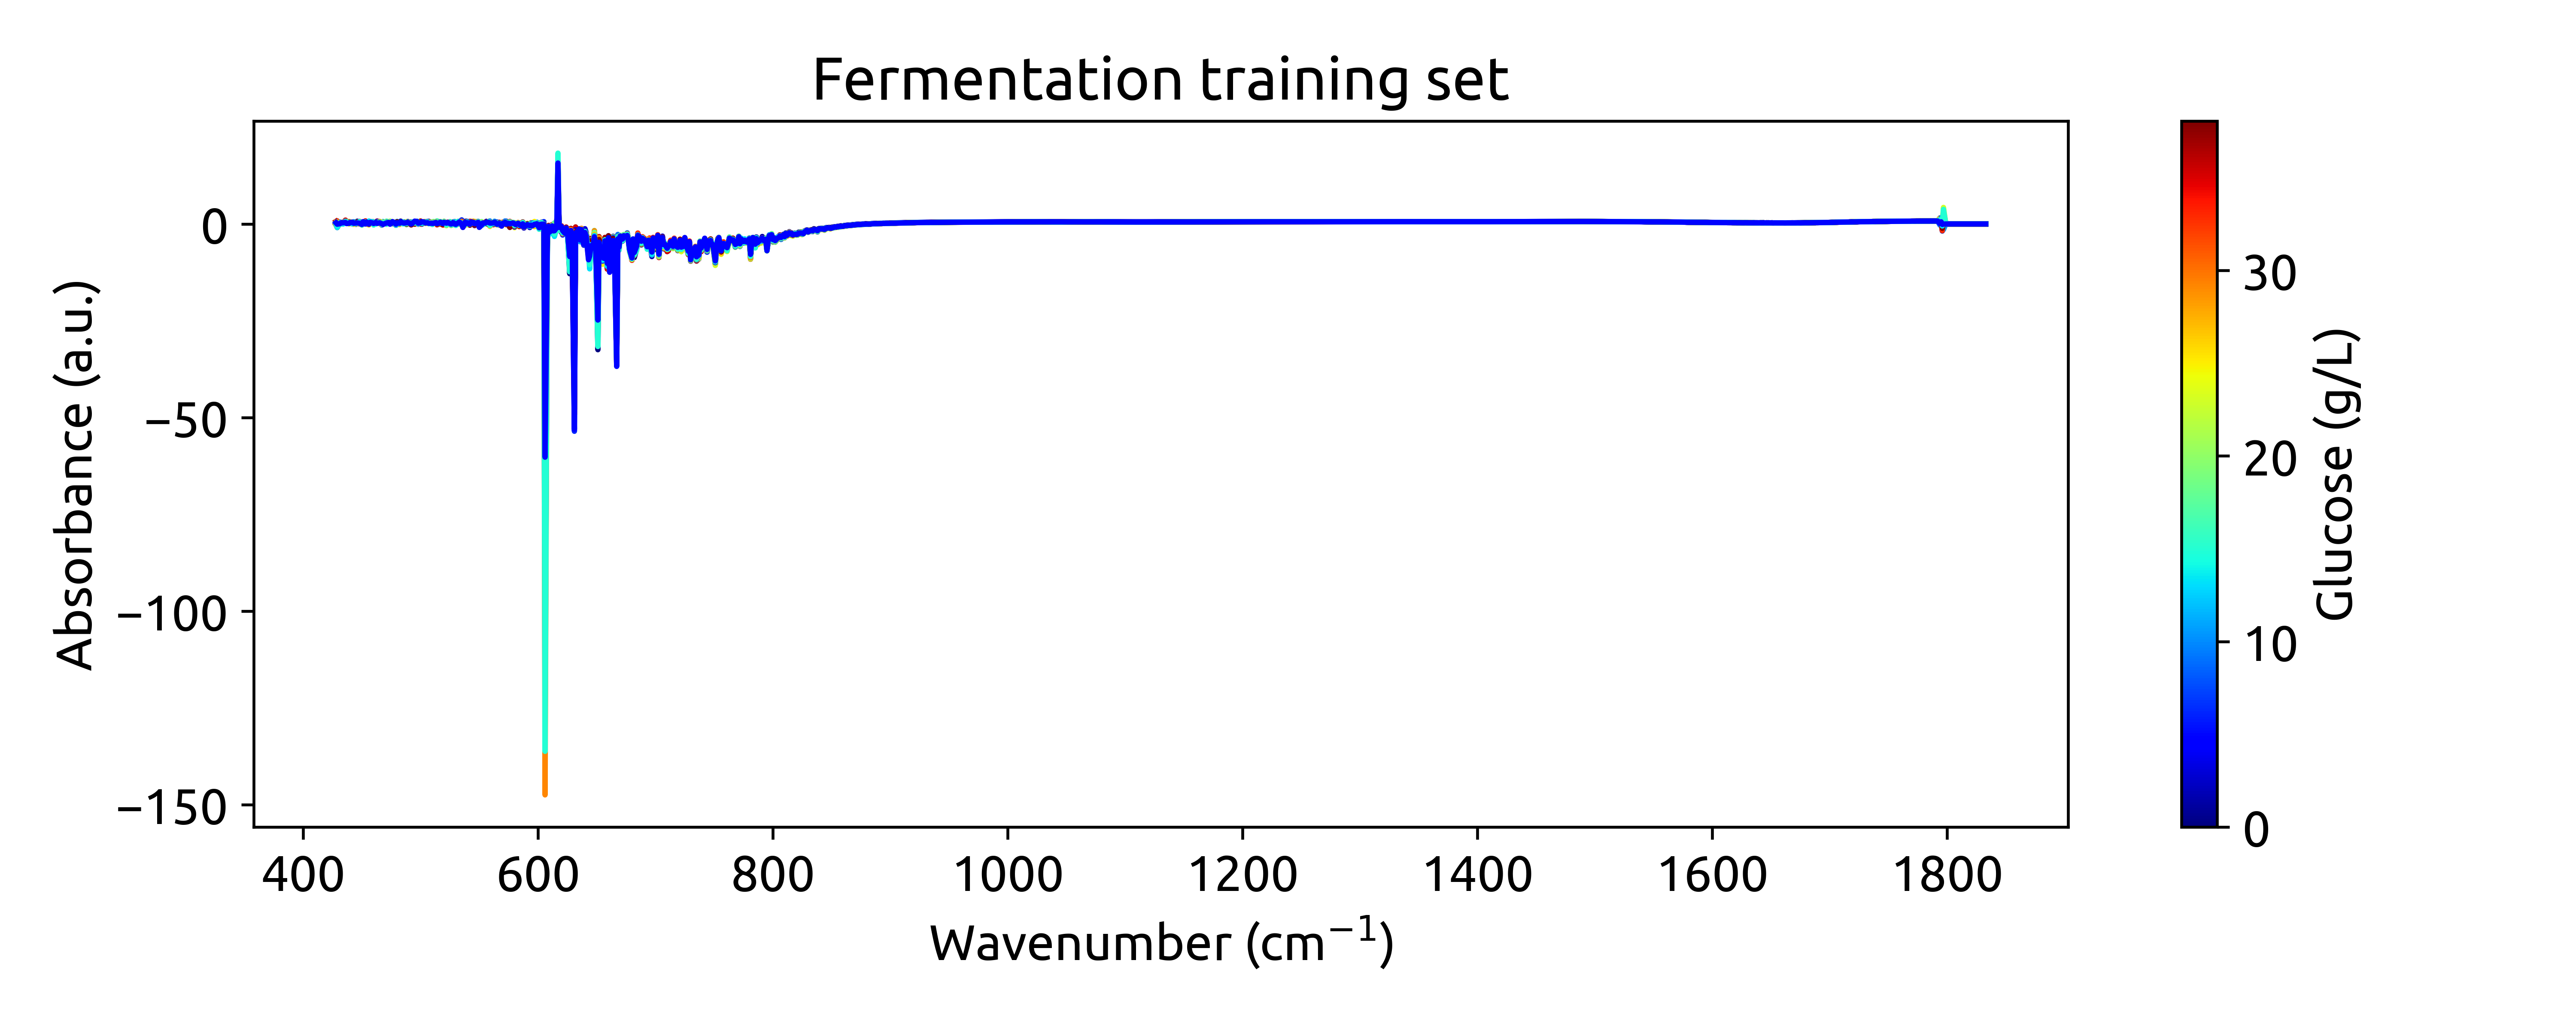 Fermentation training set